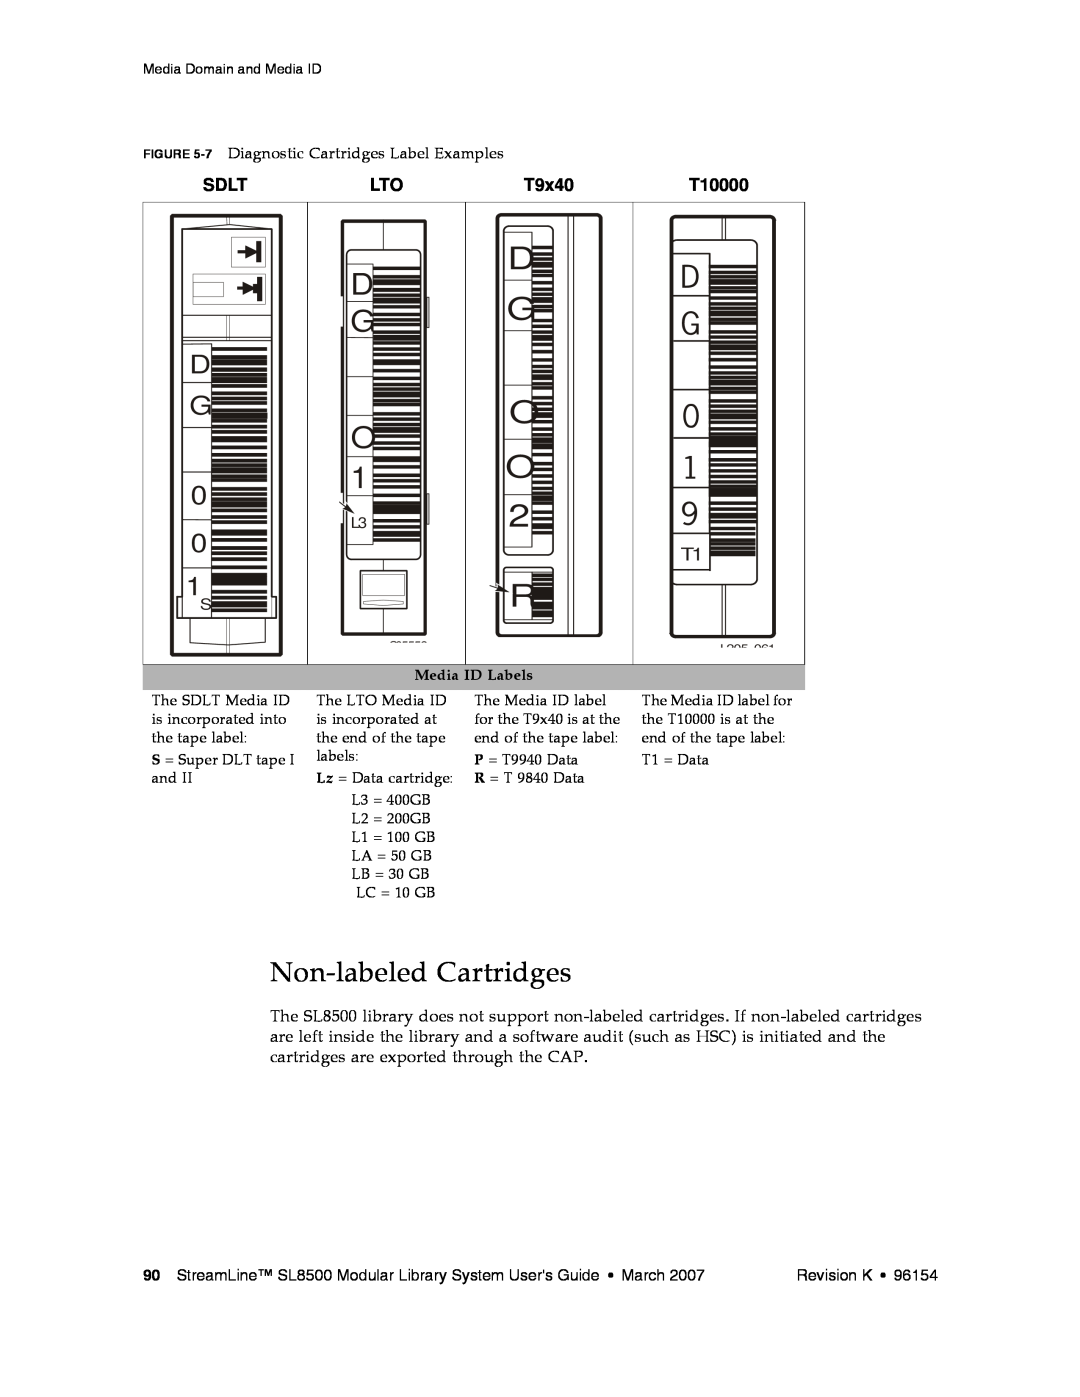 Sun Microsystems SL8500 manual Non-labeled Cartridges, Sdlt, T9x40, T10000 